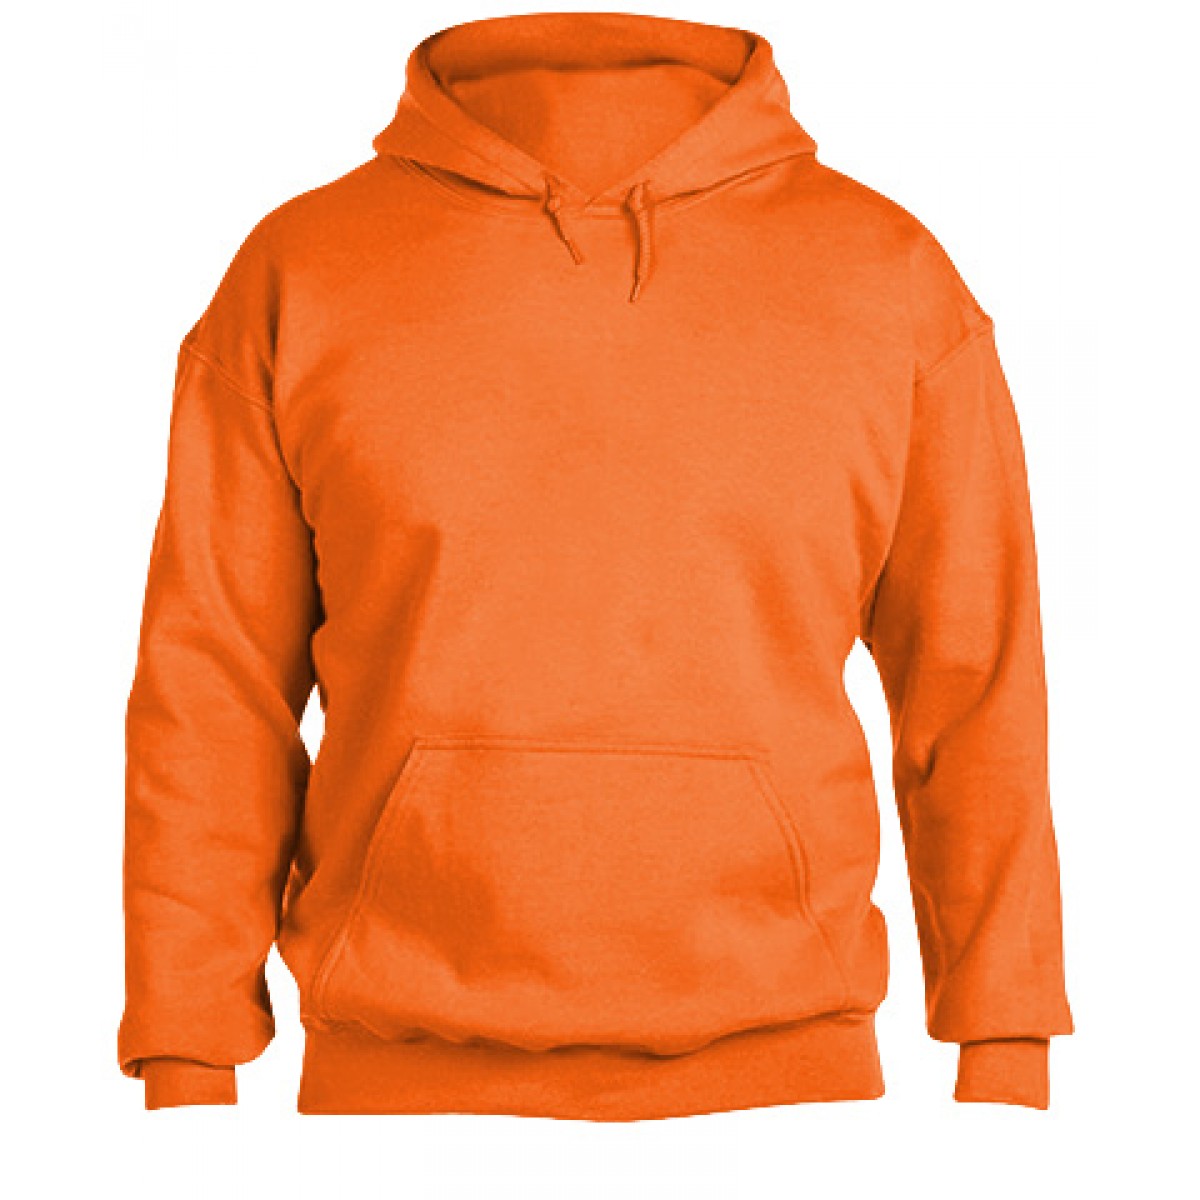 Hooded Sweatshirt 50/50 Heavy Blend-Safety Orange-YM